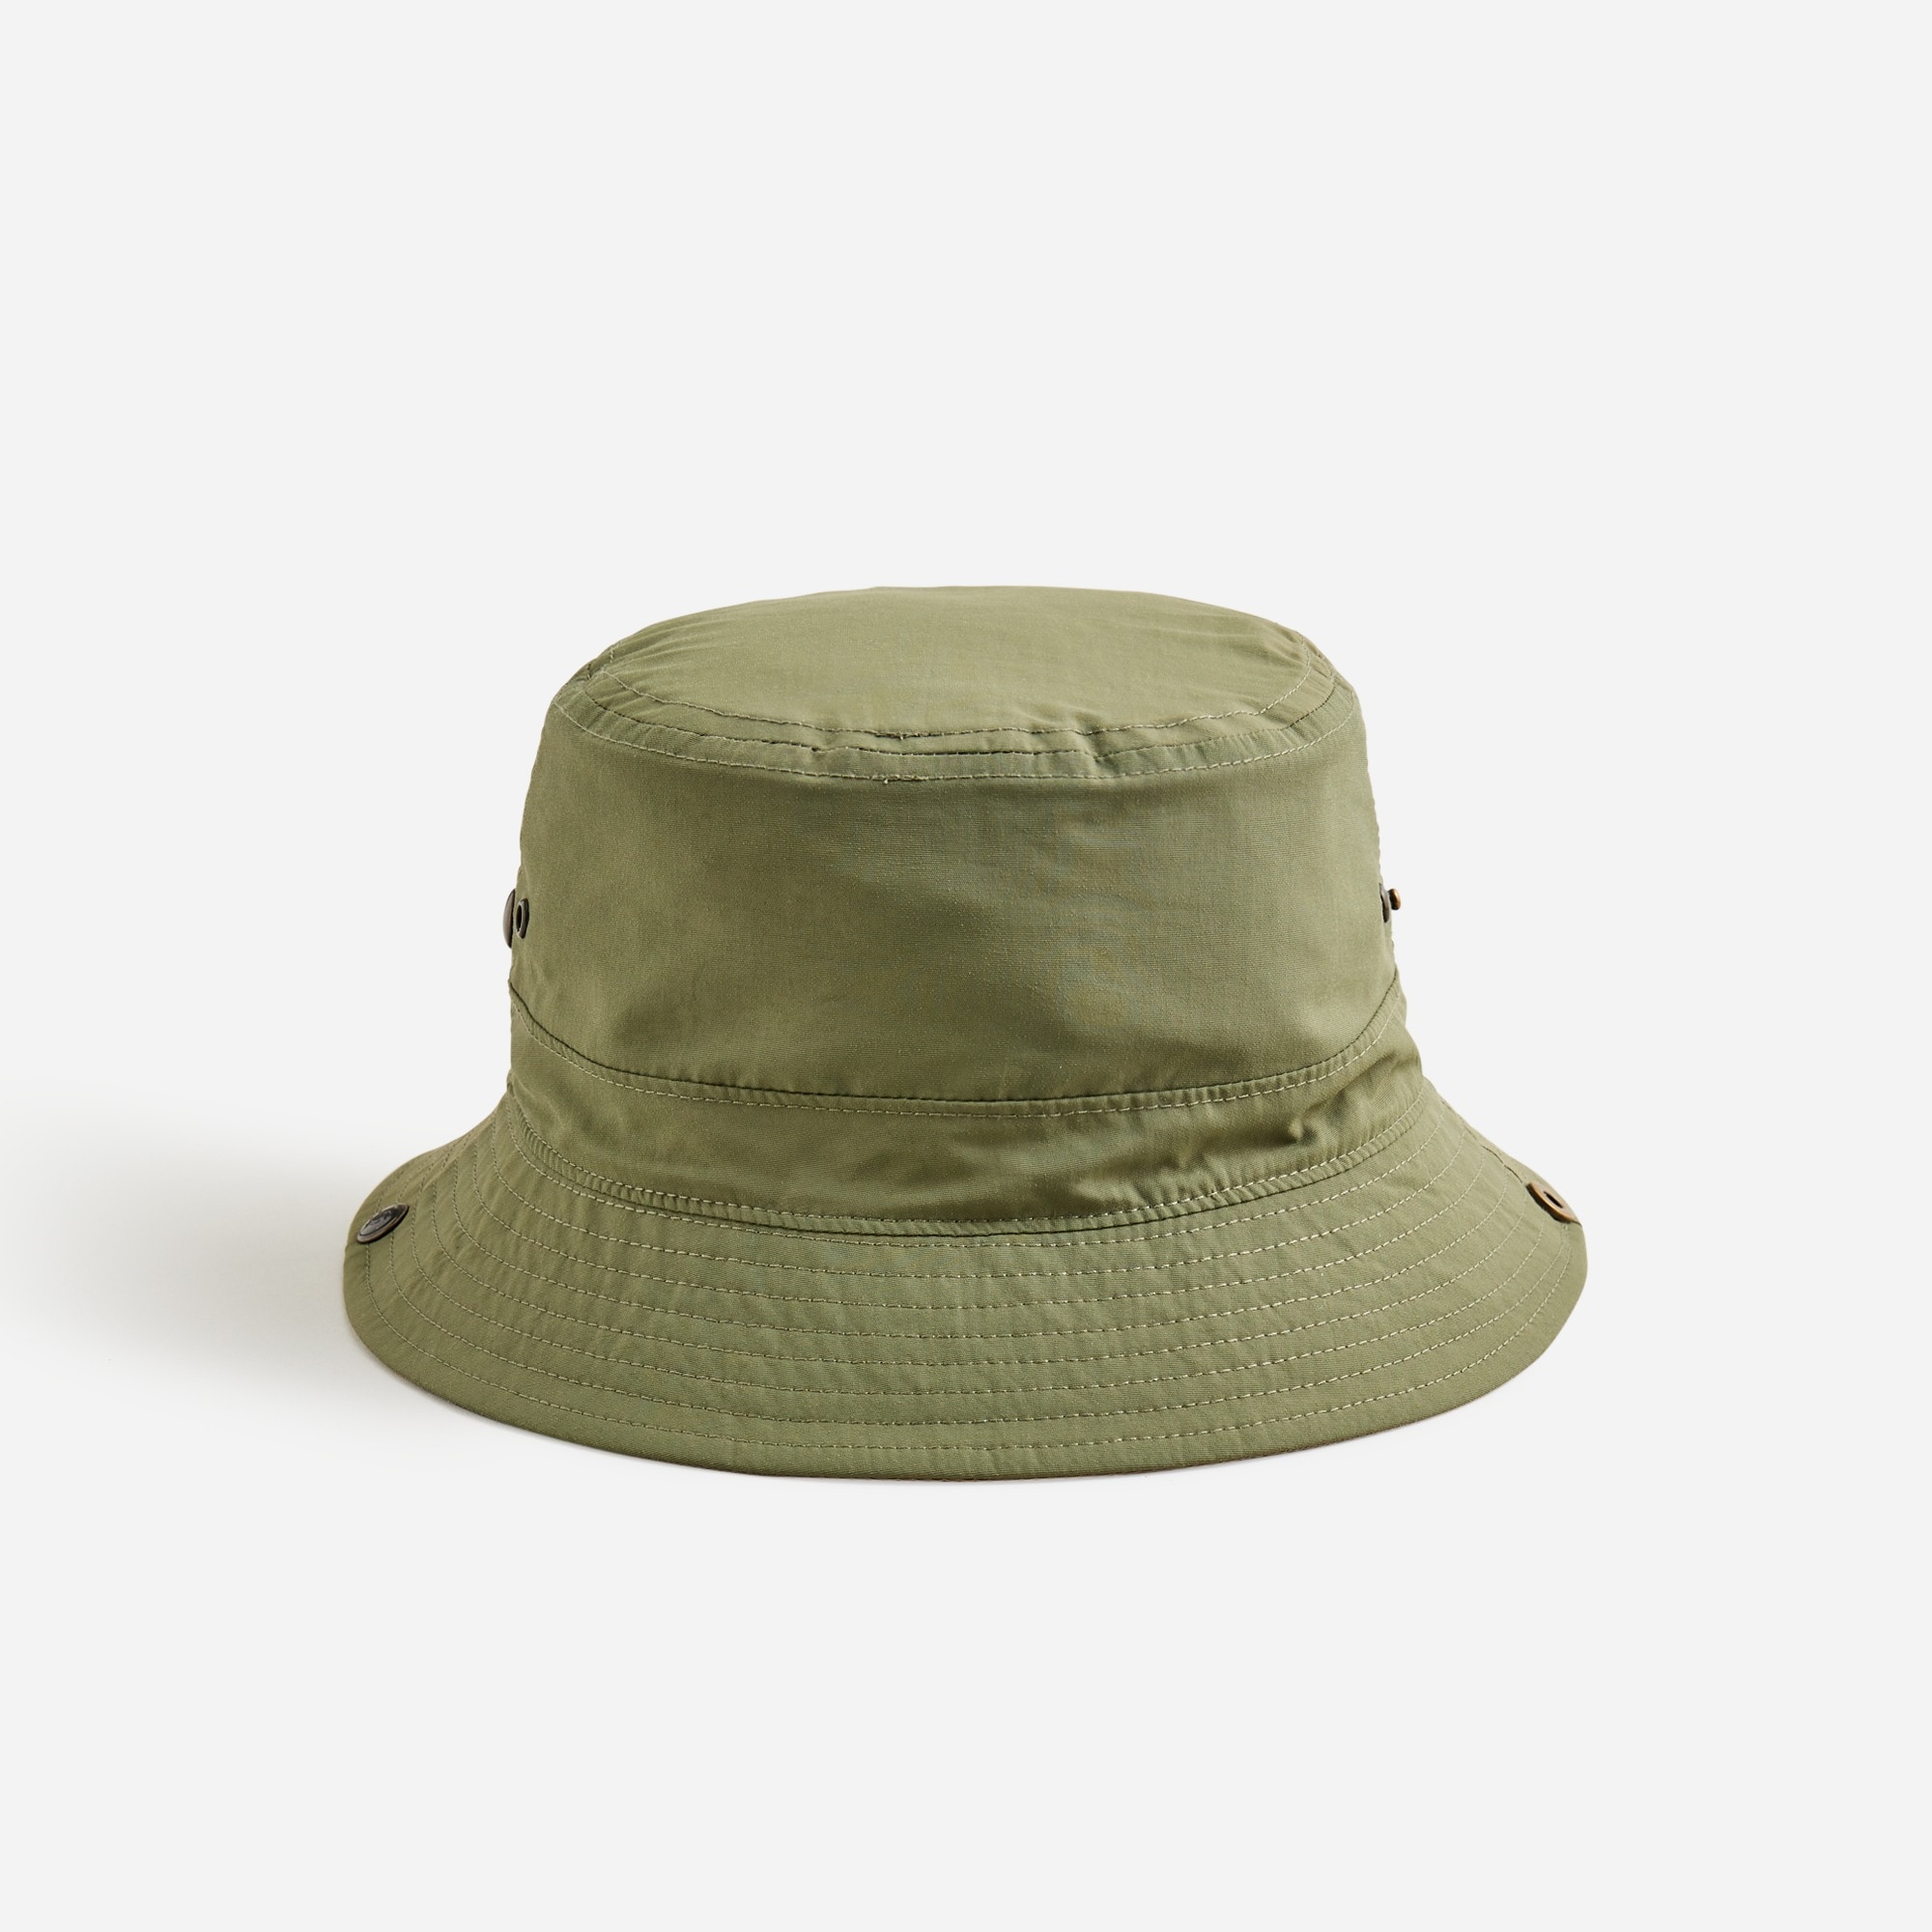  Reversible bucket hat in taslan nylon